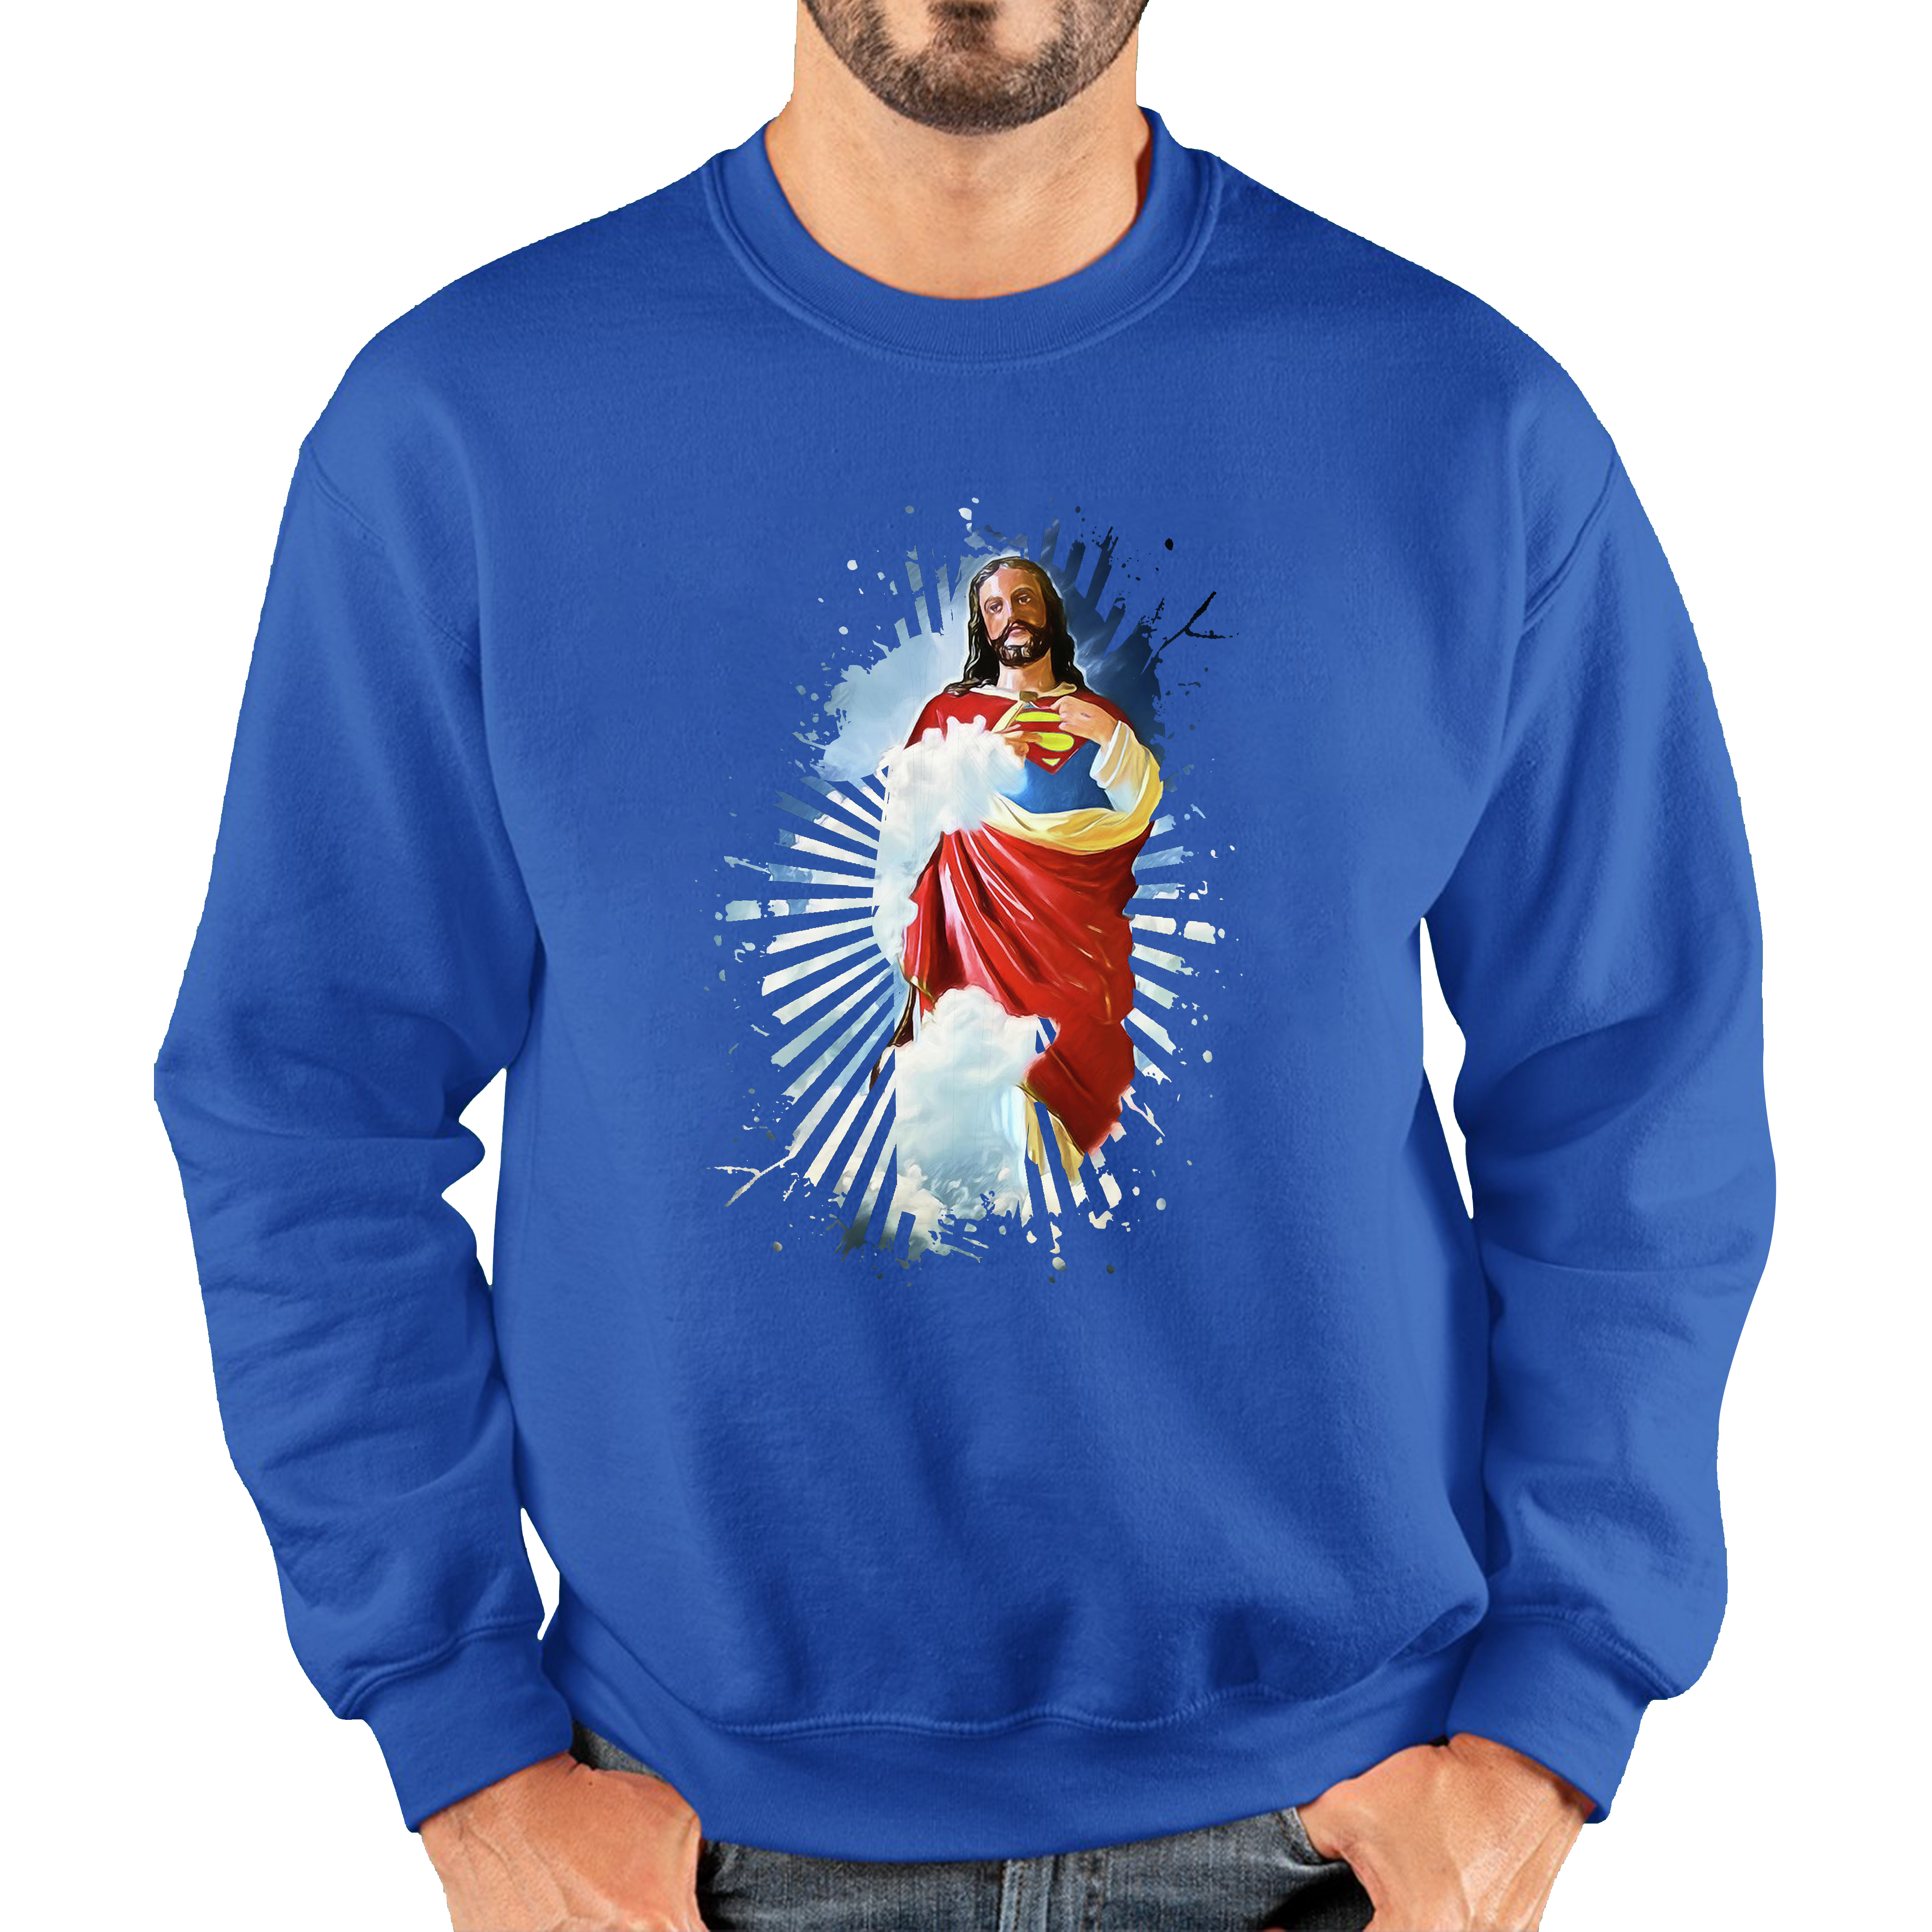 Jesus Christ Superman Jumper Superman Inspired Spoof Avengers Superhero Christian Gift Unisex Sweatshirt